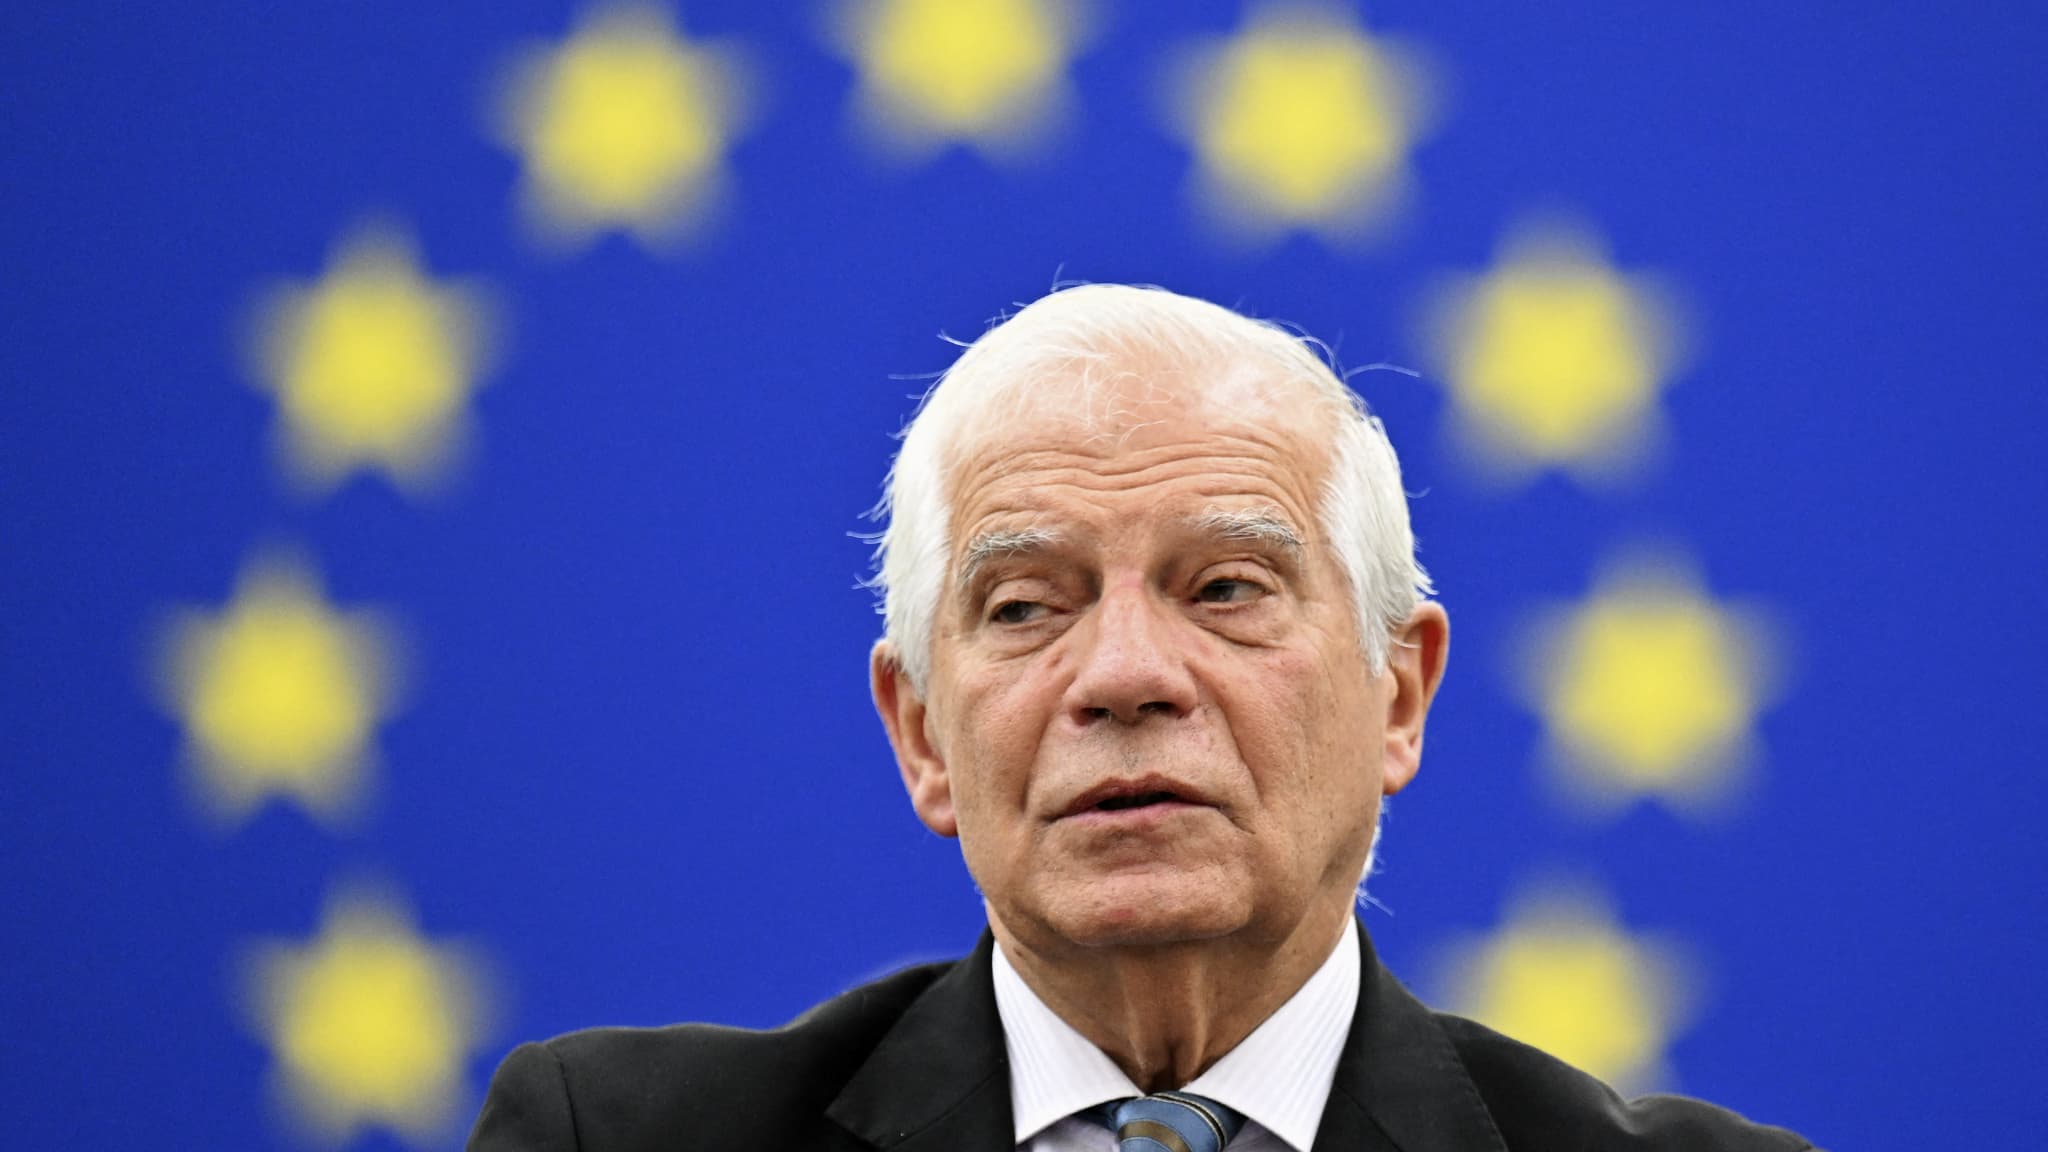 The European Union fears the “collapse” of Tunisia